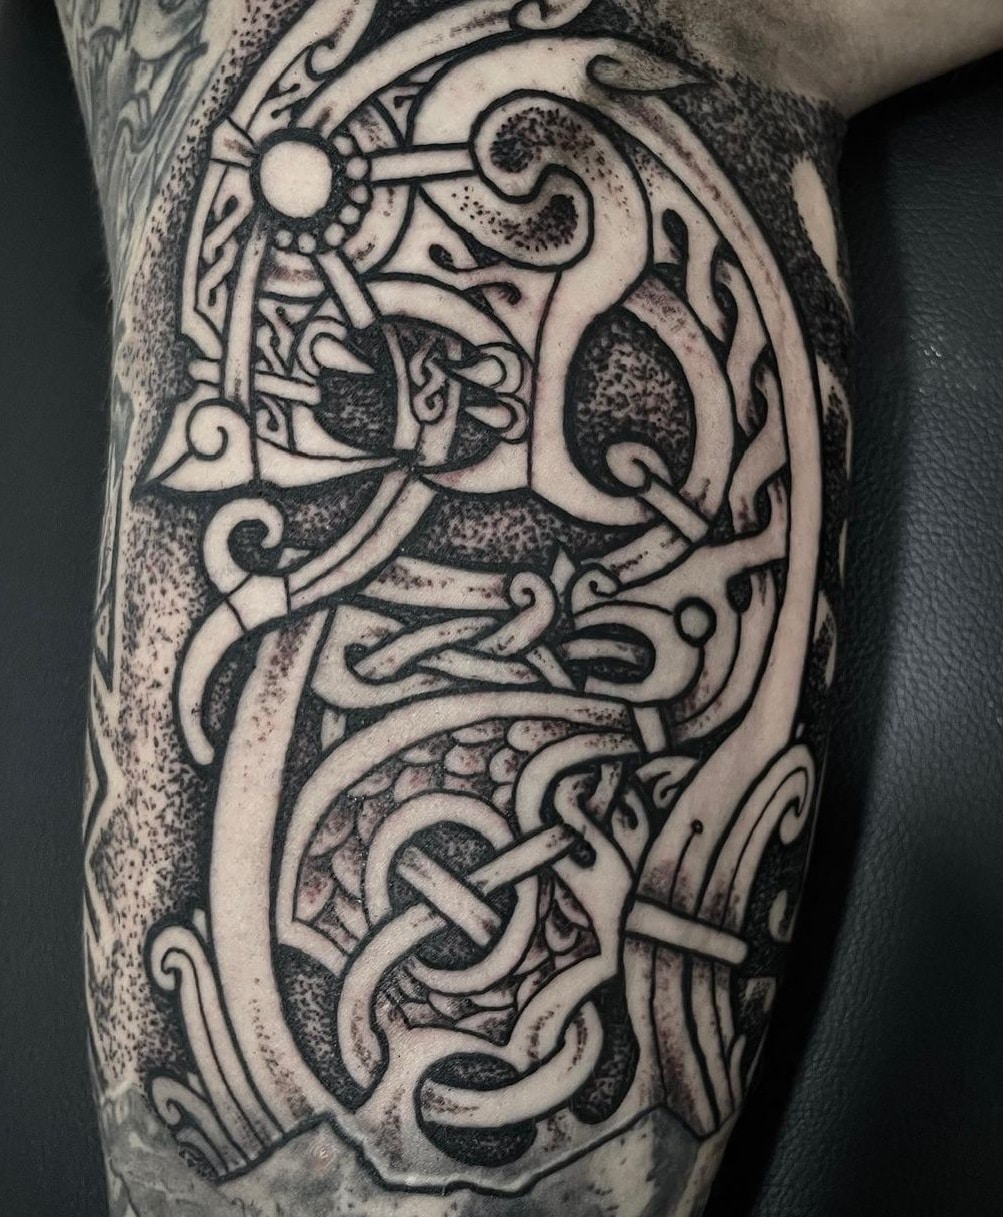 Jormungandr tattoo designs